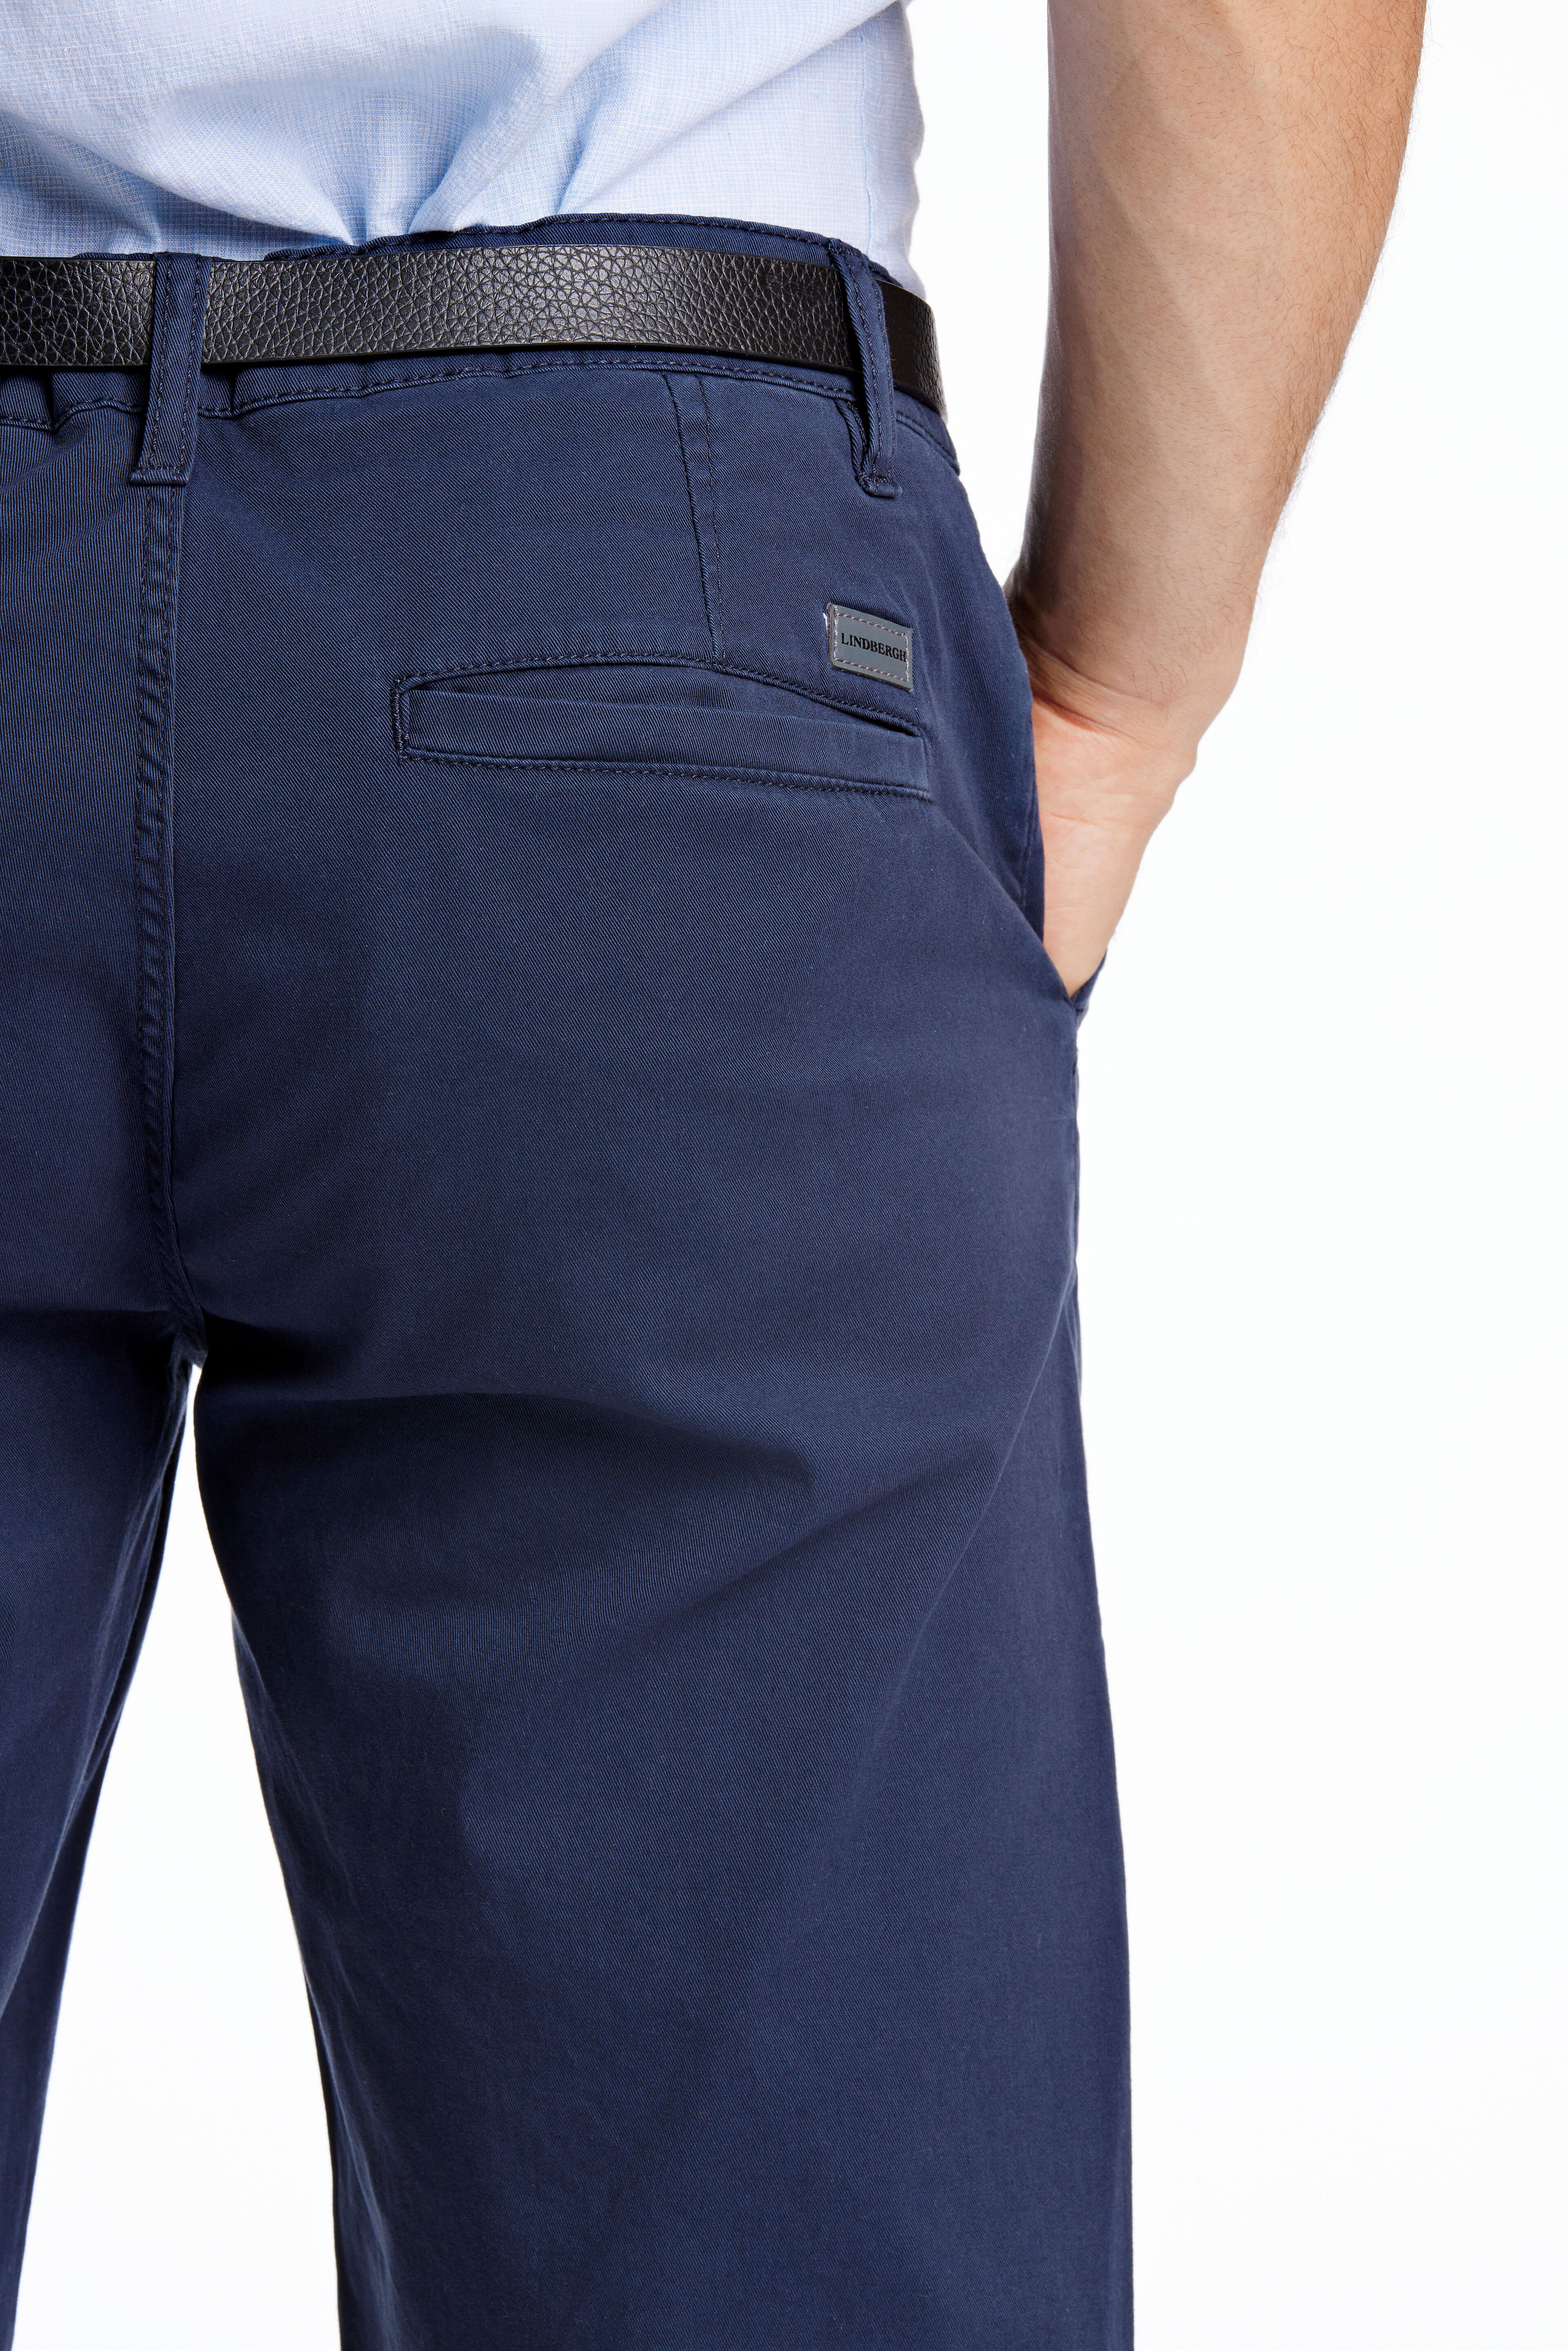 Chino-Shorts | Slim fit 30-54007A